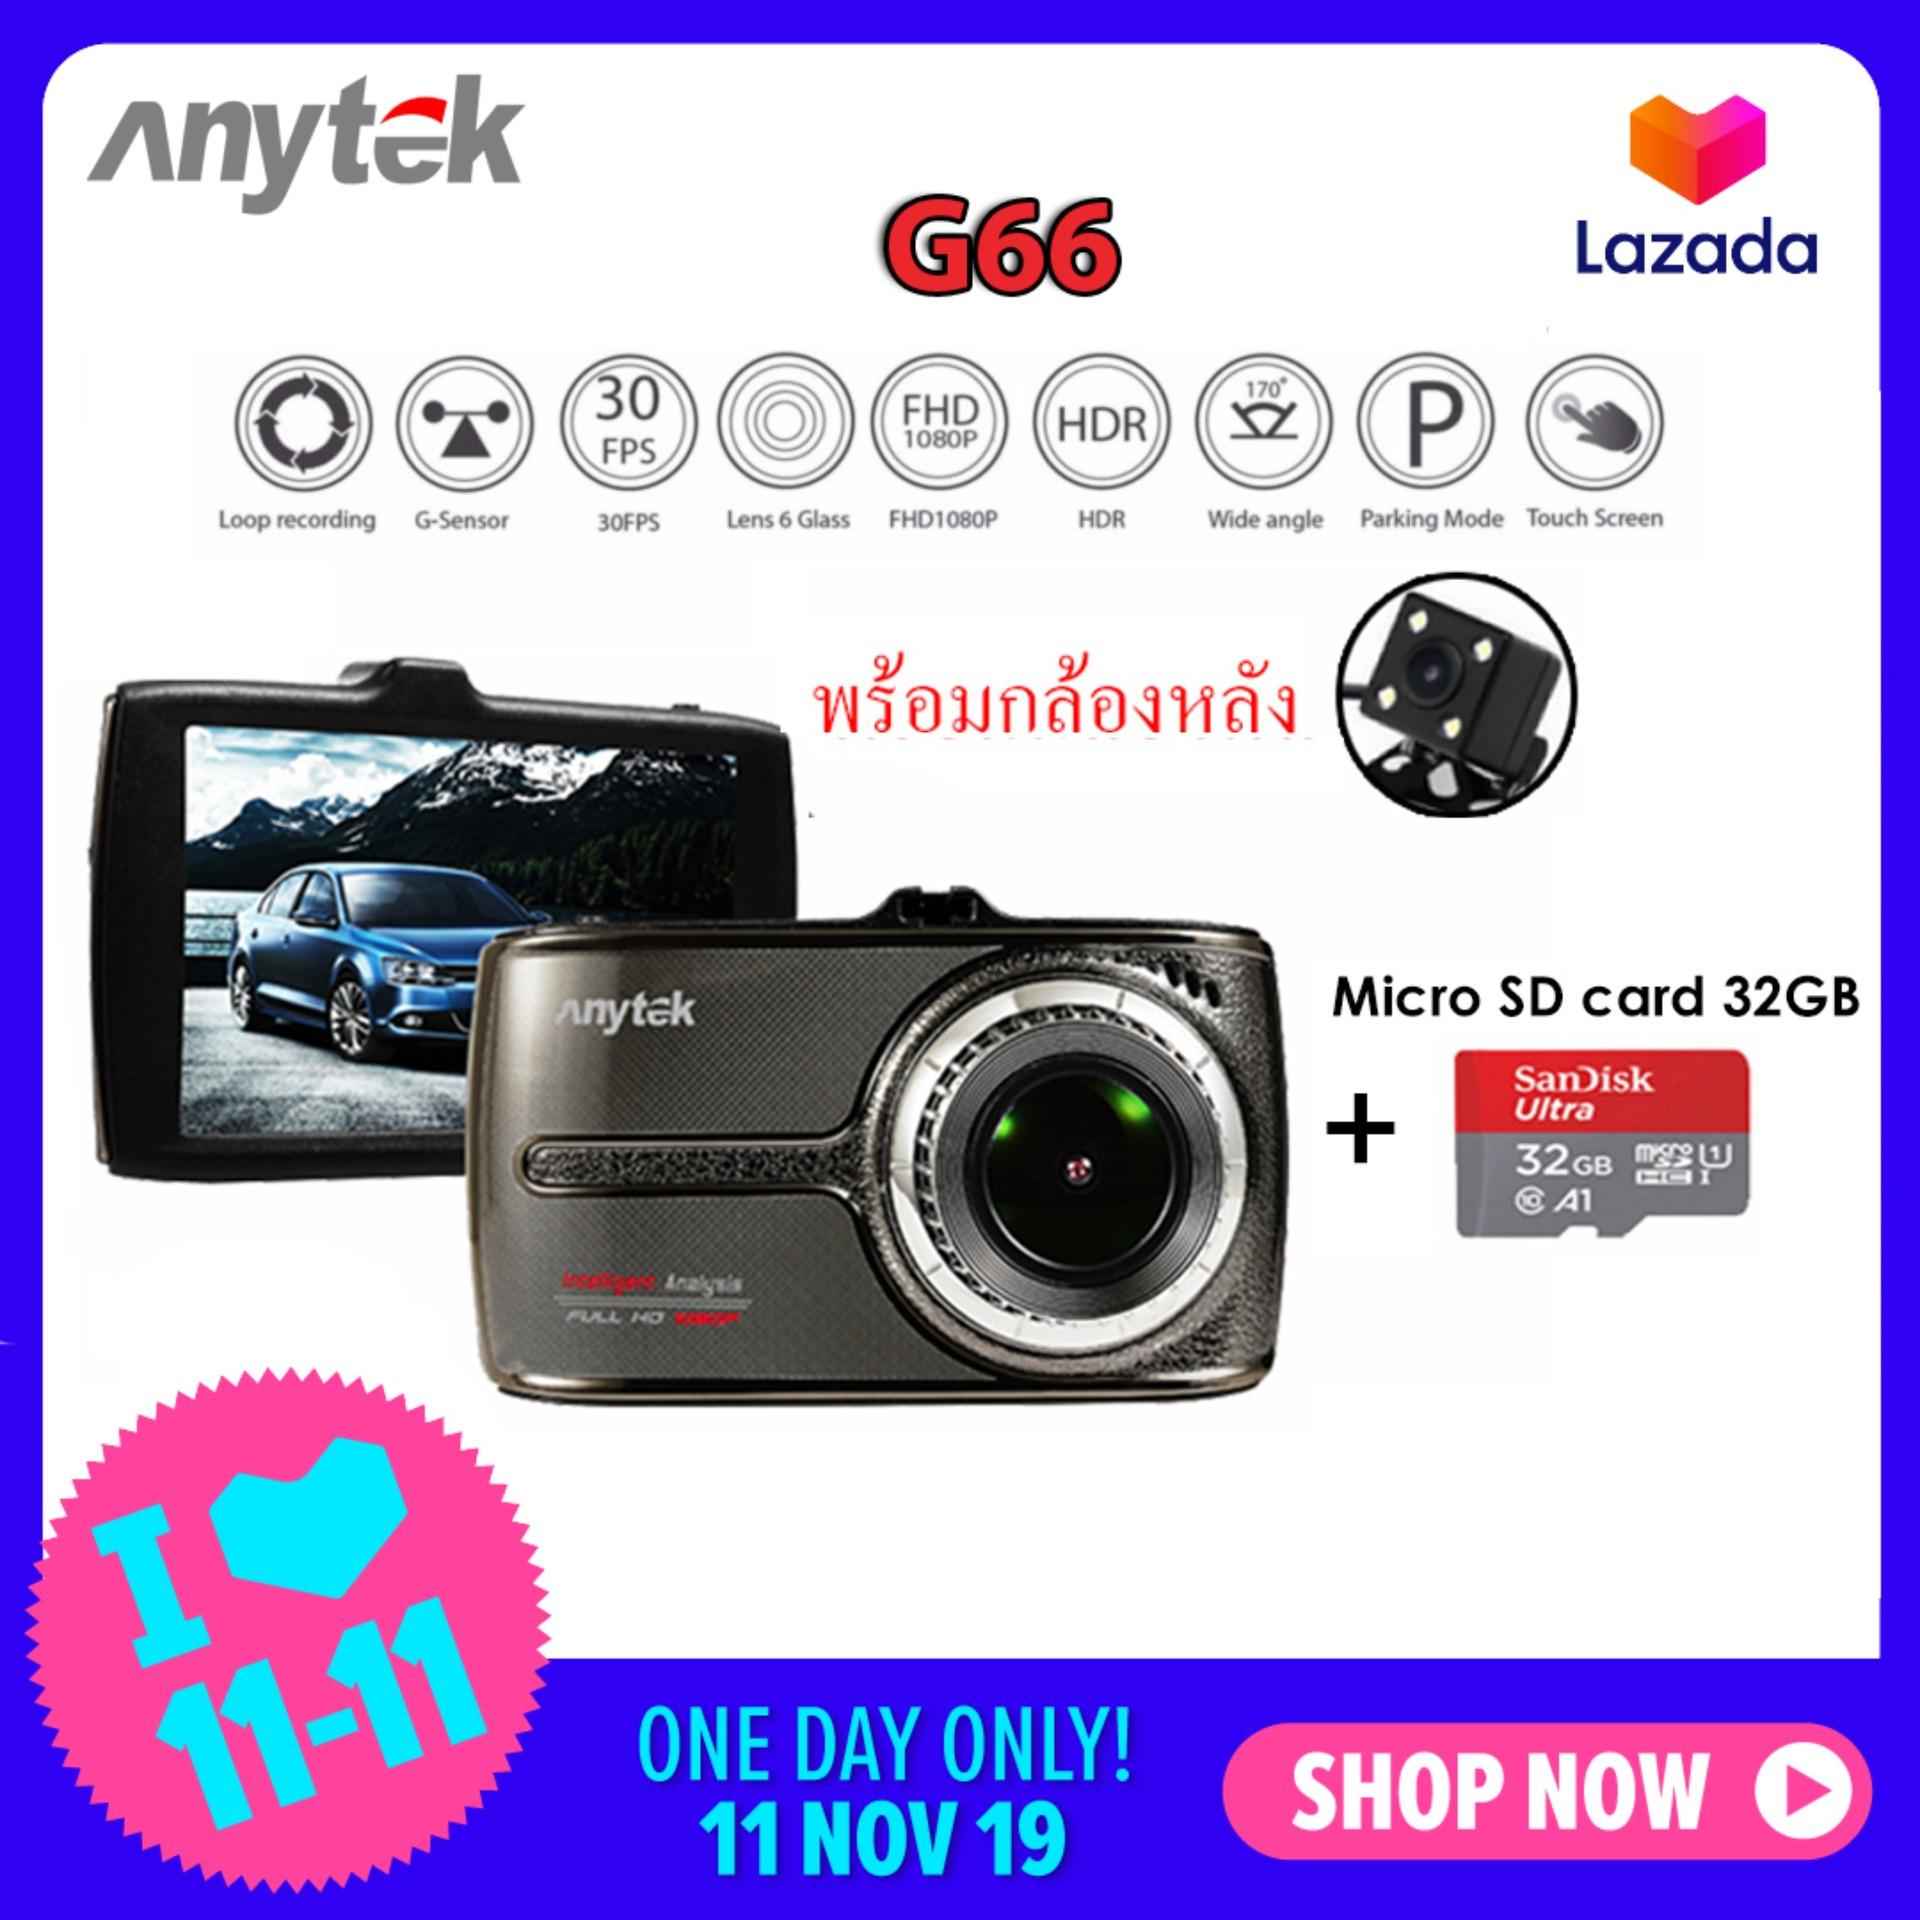 Anytek Original NT96655 Car Dash Cam Camera กล้องติดรถยนต์ DVR รุ่น G66 หน้าจอทัชสกรีน (Touch Screen) เมนูภาษาไทย กล้องหน้า+กล้องมองหลัง Full HD และ Micro SD card 32GB